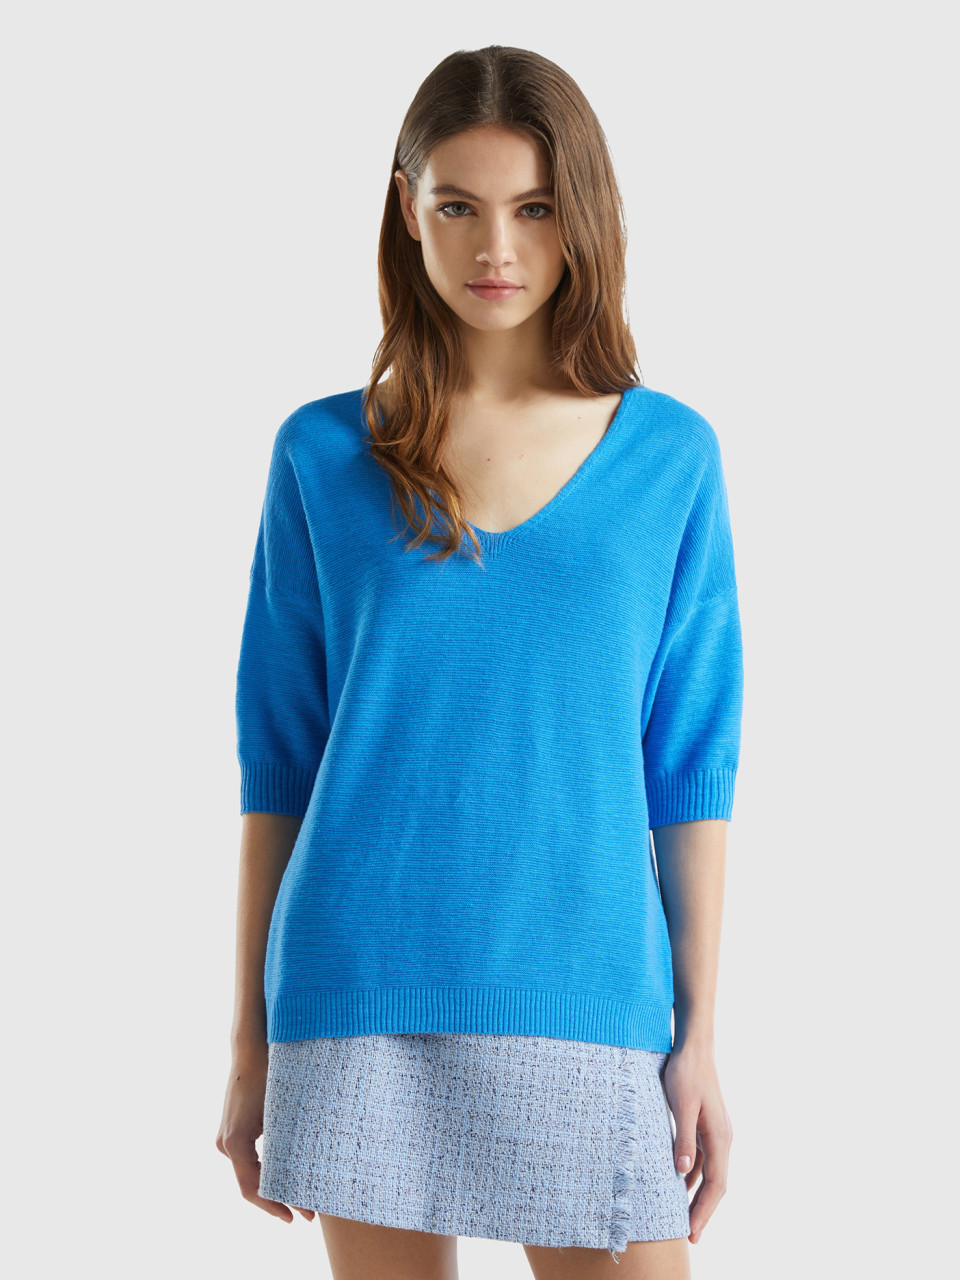 Benetton, Sweater In Linen And Cotton Blend, Blue, Women